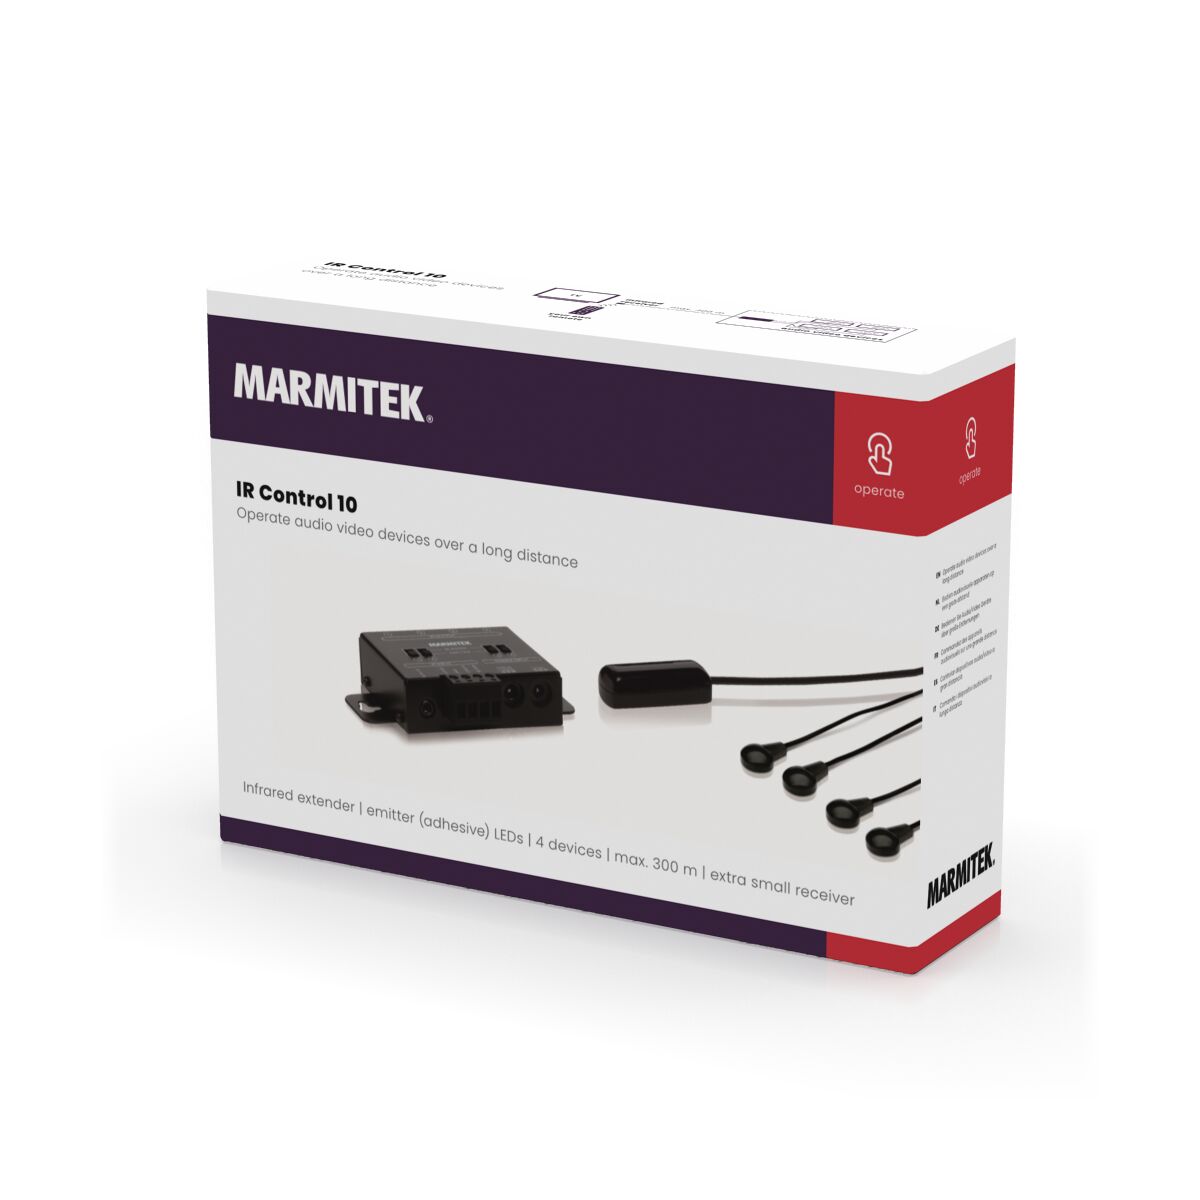 IR Control 10 - IR extender - 3D Packshot Image | Marmitek